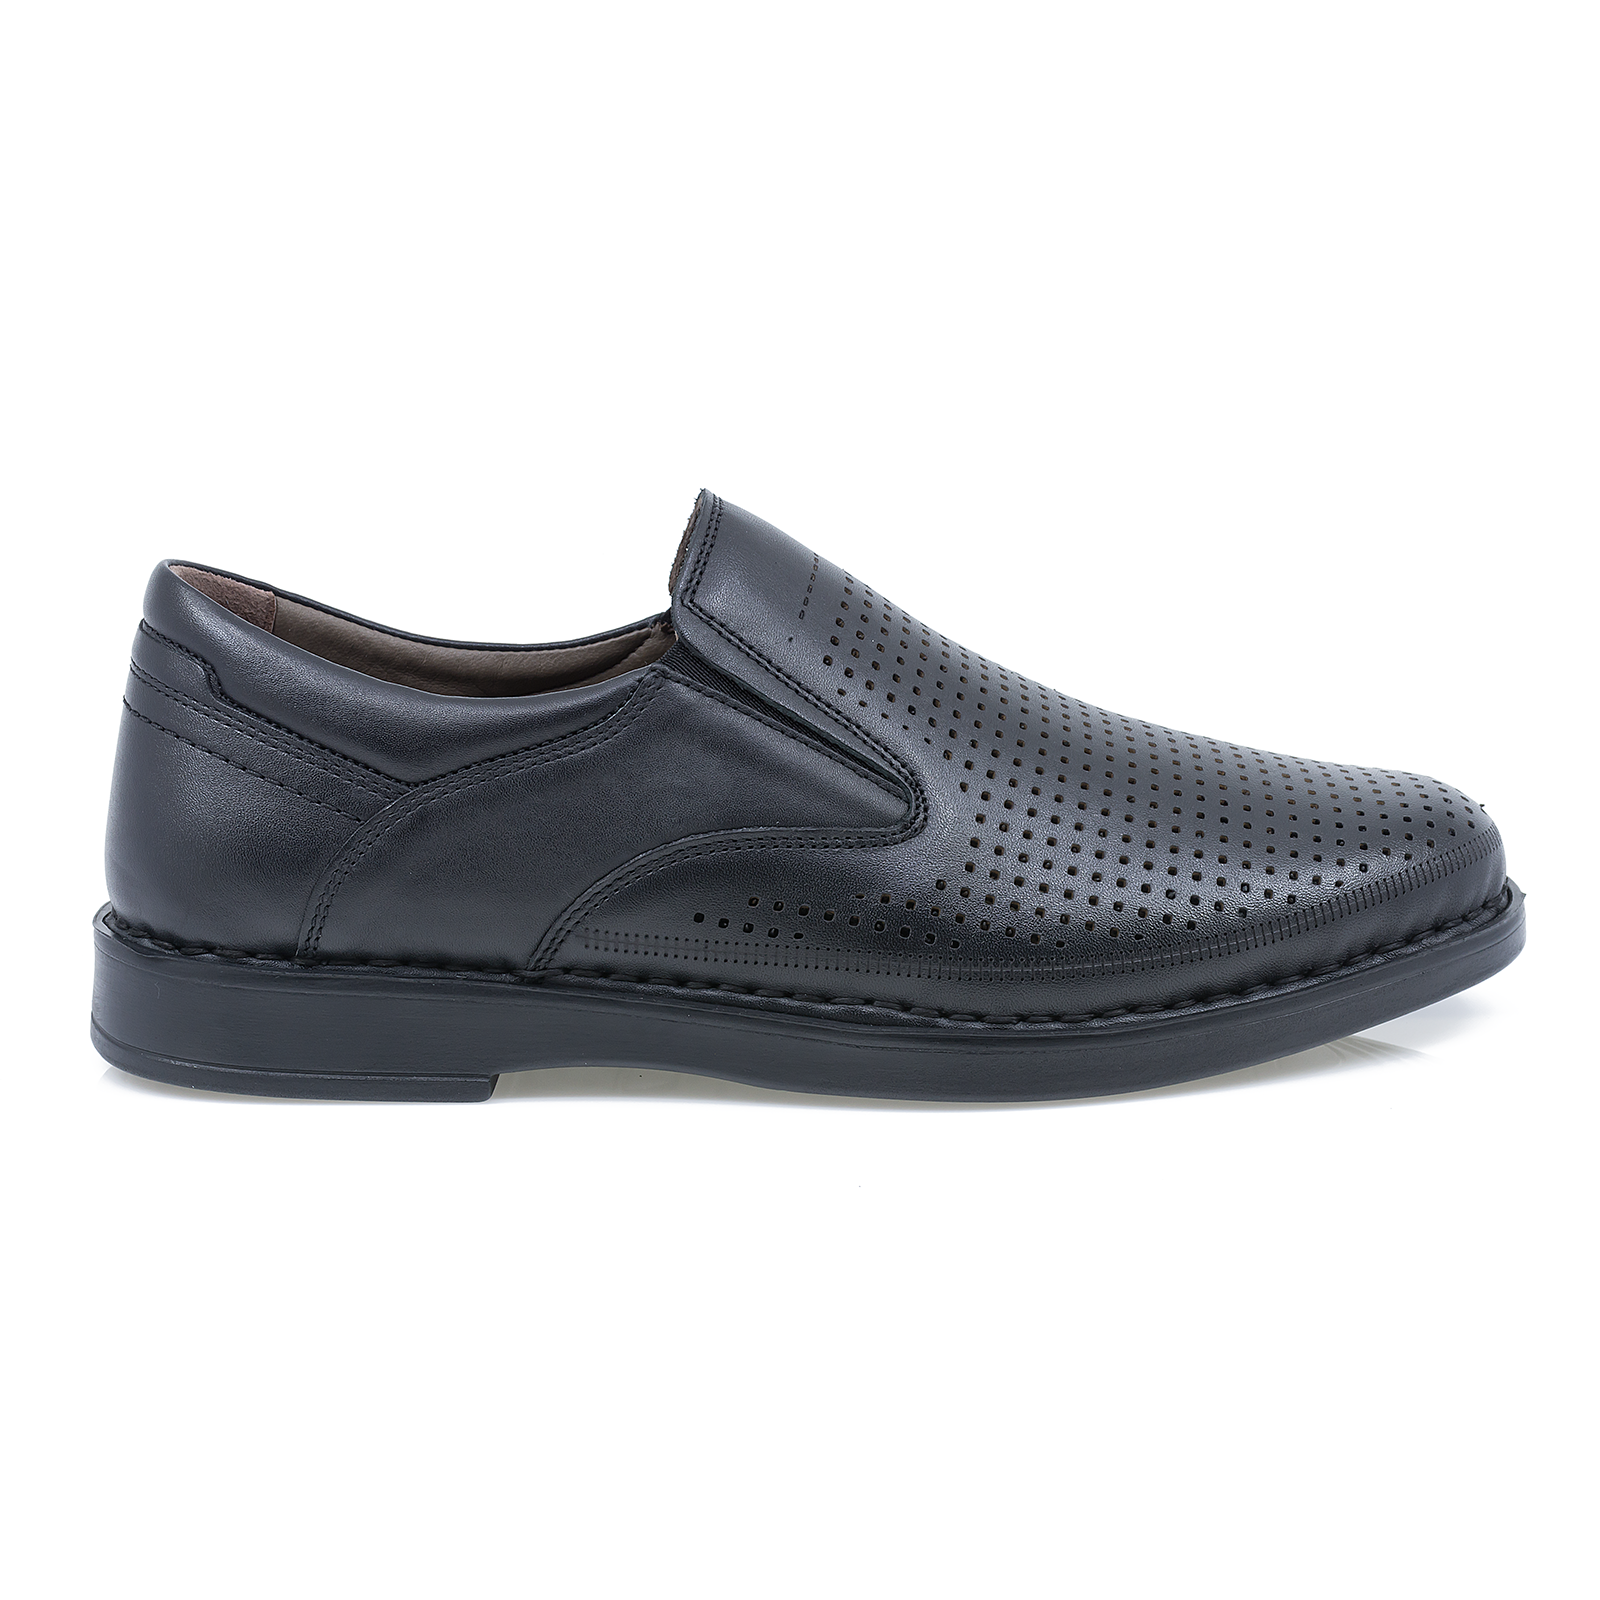 Pantofi-barbati-Dimport-104-3-eleganti-piele-naturala-negru-nouamoda-1